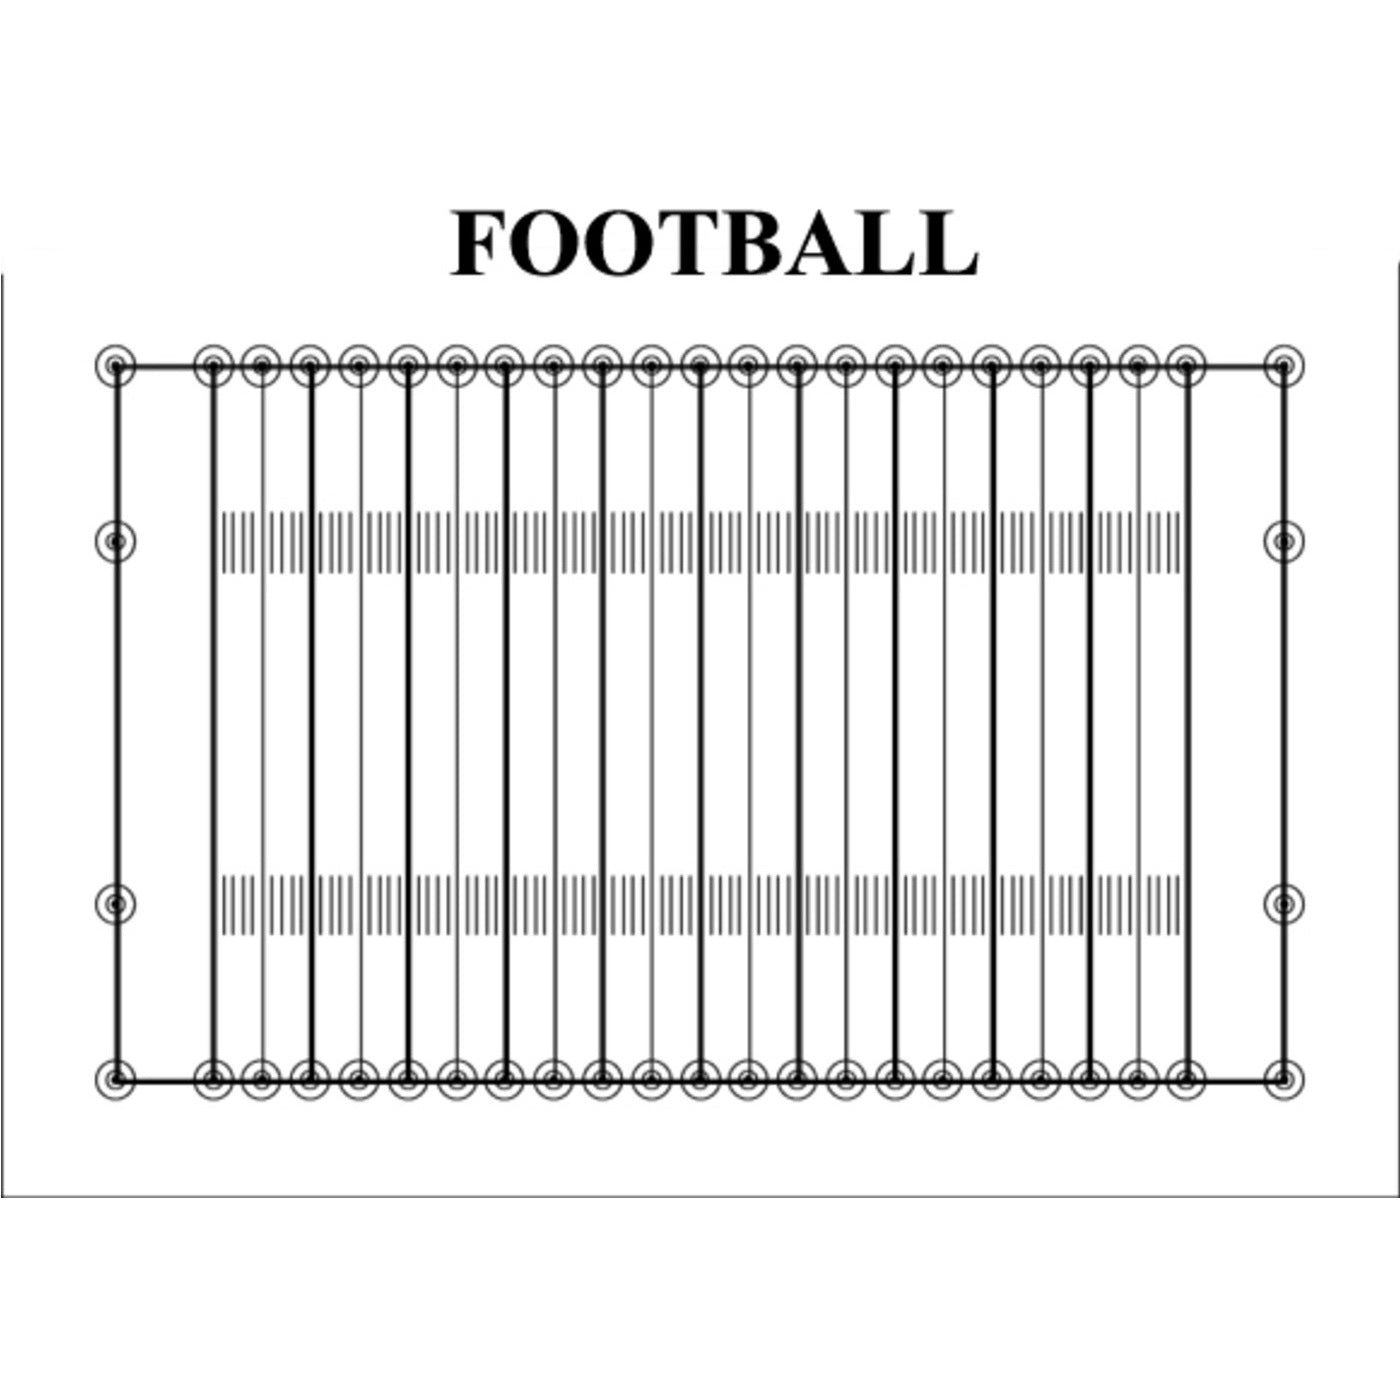 trigon sports proline football field layout system